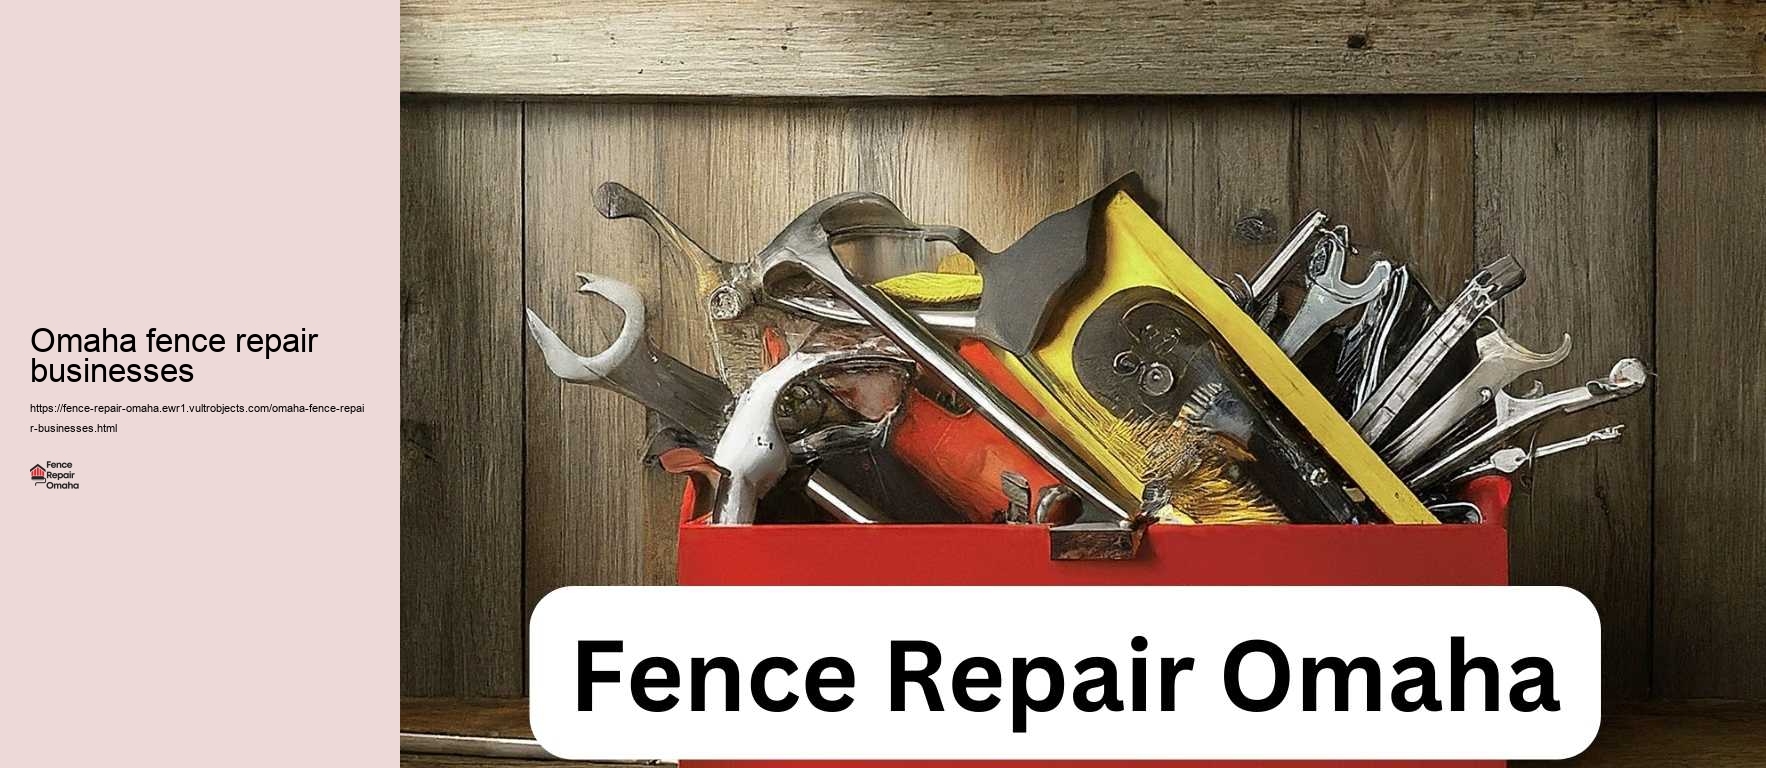 Omaha fence repair businesses